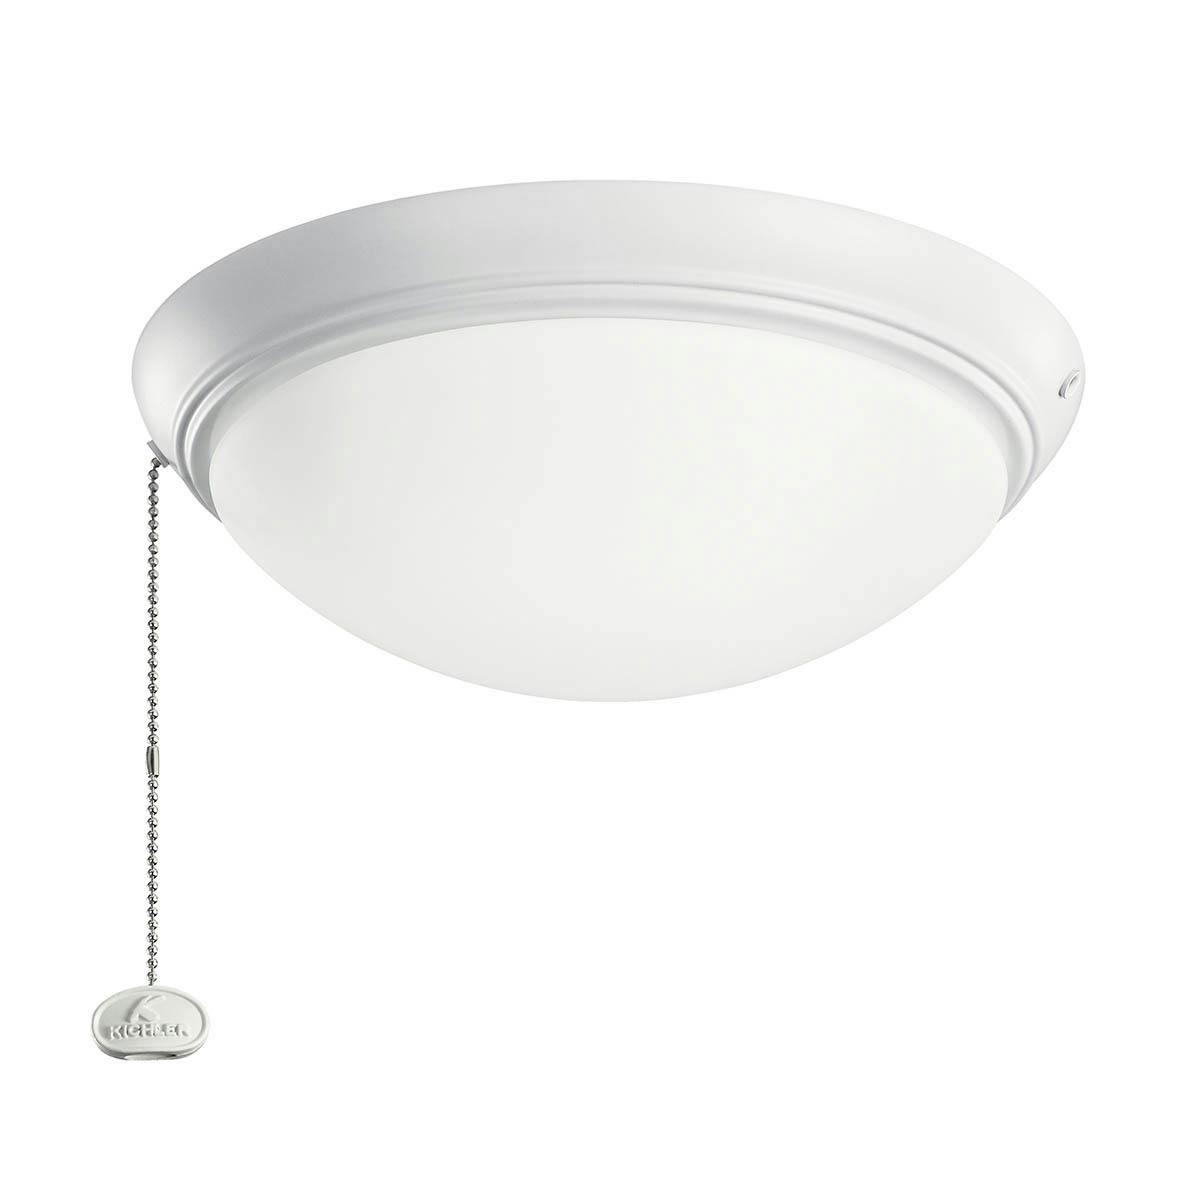 LED Low-Profile 11.5" Light Kit White on a white background